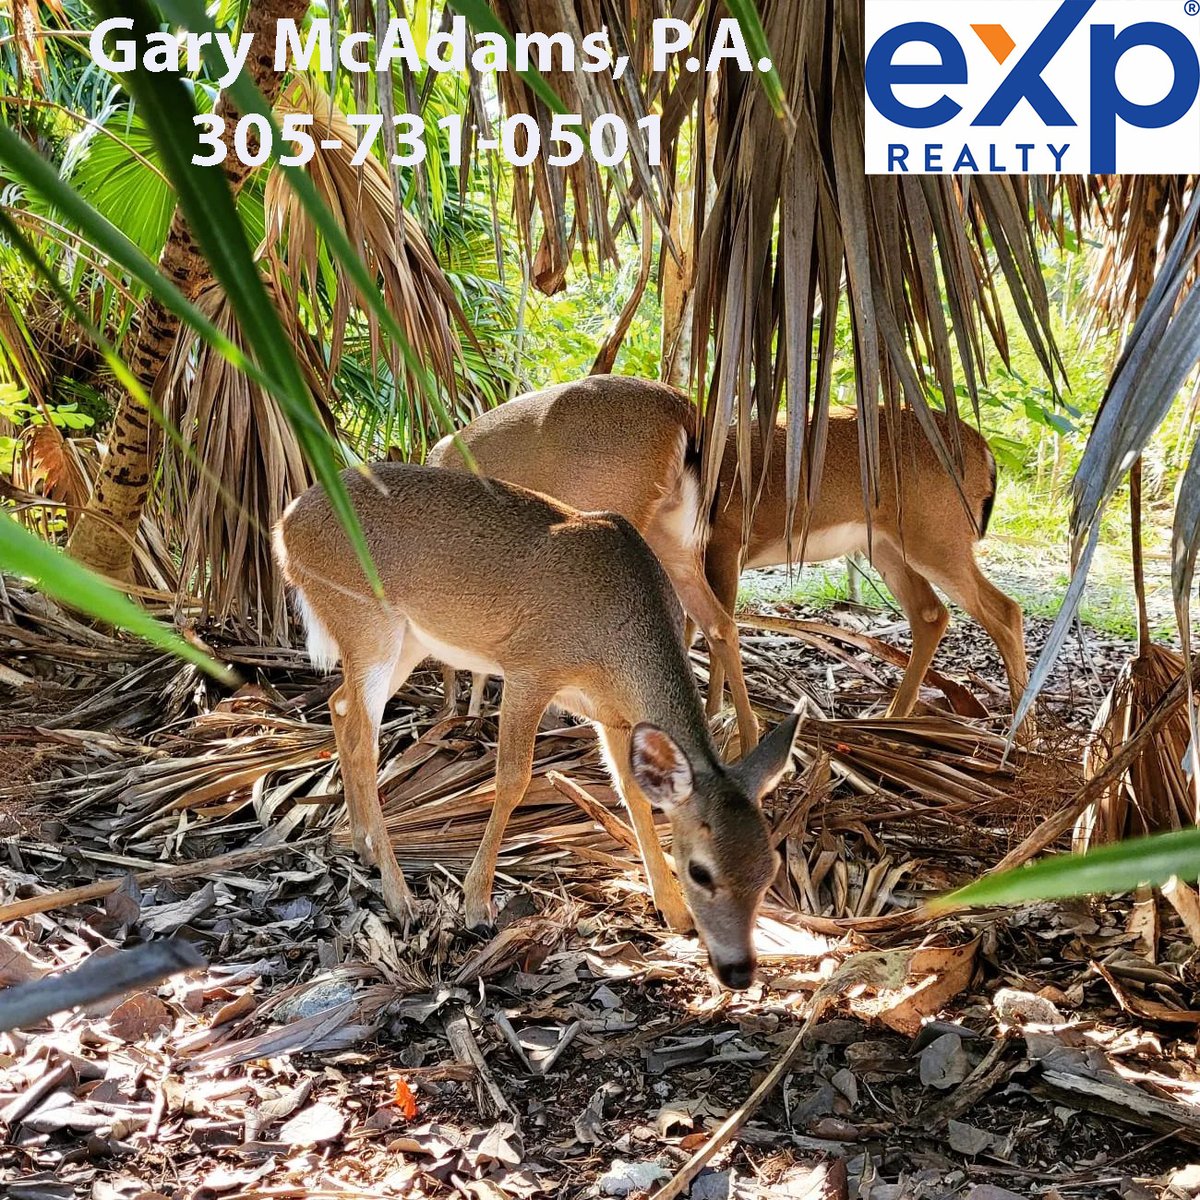 The house I showed on Big Pine Key today had 3 Key Deer in the backyard. Gary McAdams, Key West Realtor, eXp Realty, (305) 731-0501. #keywest #keywestrealestate #keywestrealtor #garymcadams #garymcadamsrealtor #FloridaKeysRealEstate #garymcadamskeywest #realestate #floridakeys